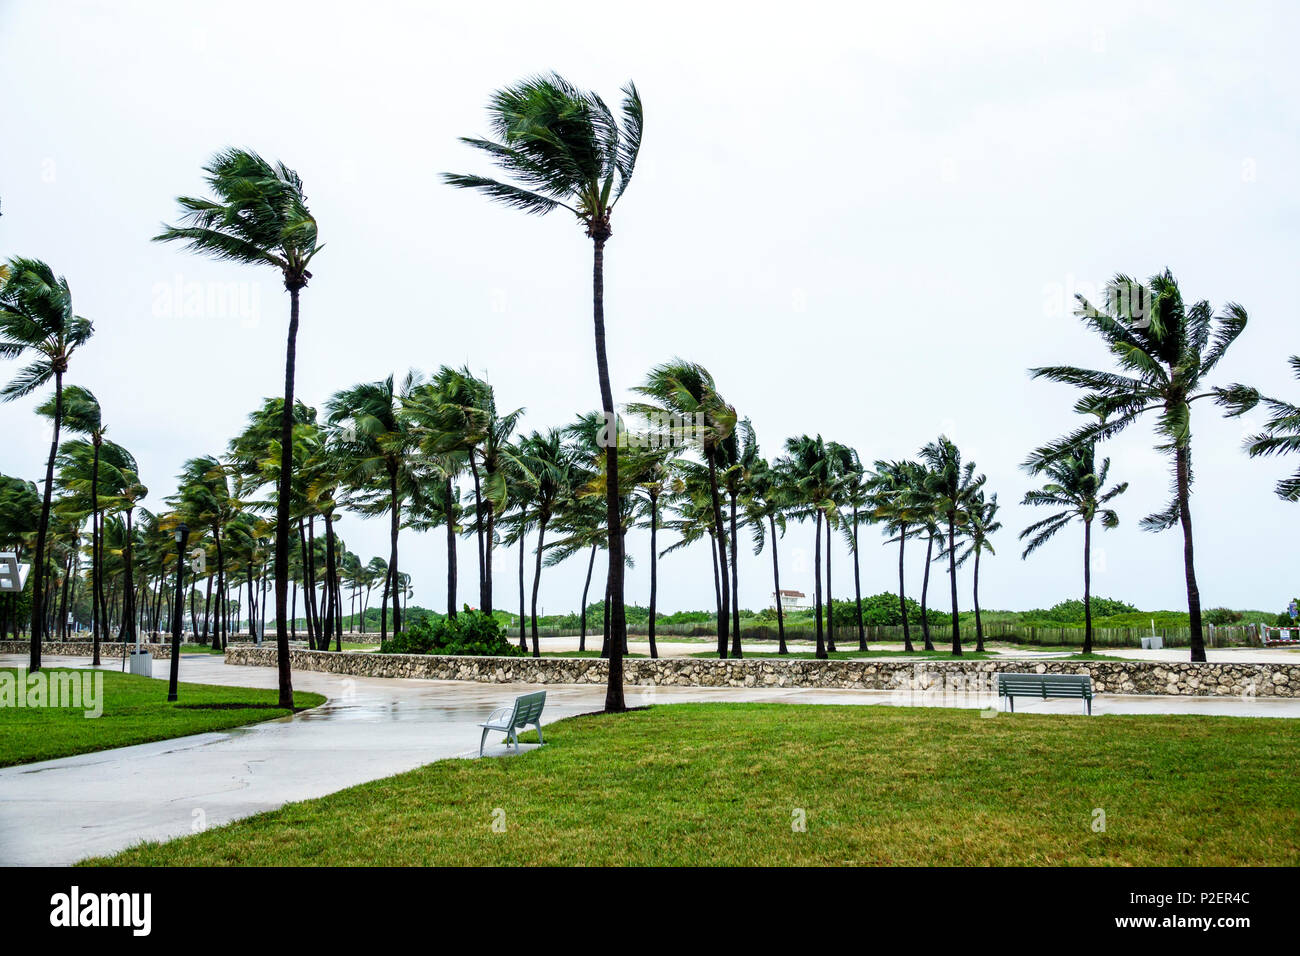 Miami Beach Florida,Lummus Park,Hurricane Irma,tropical storm force winds,palm trees bending,rainy,fronds blowing,deserted,windy,FL170911040 Stock Photo